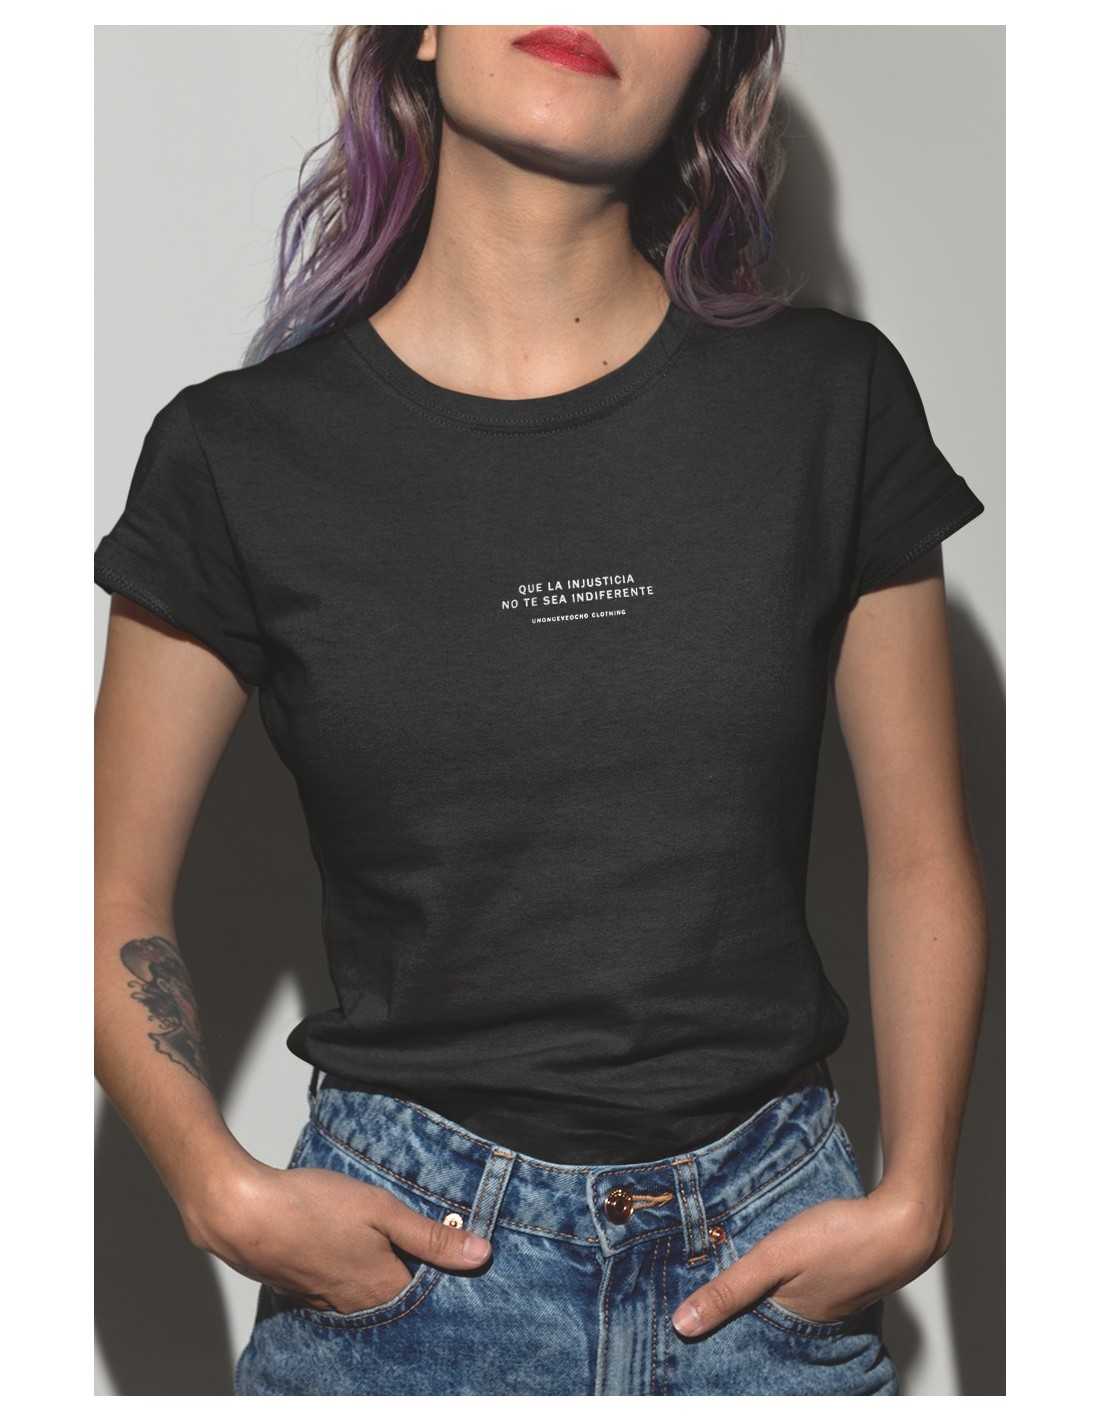 Camiseta mujer indiferente - 17,95 €